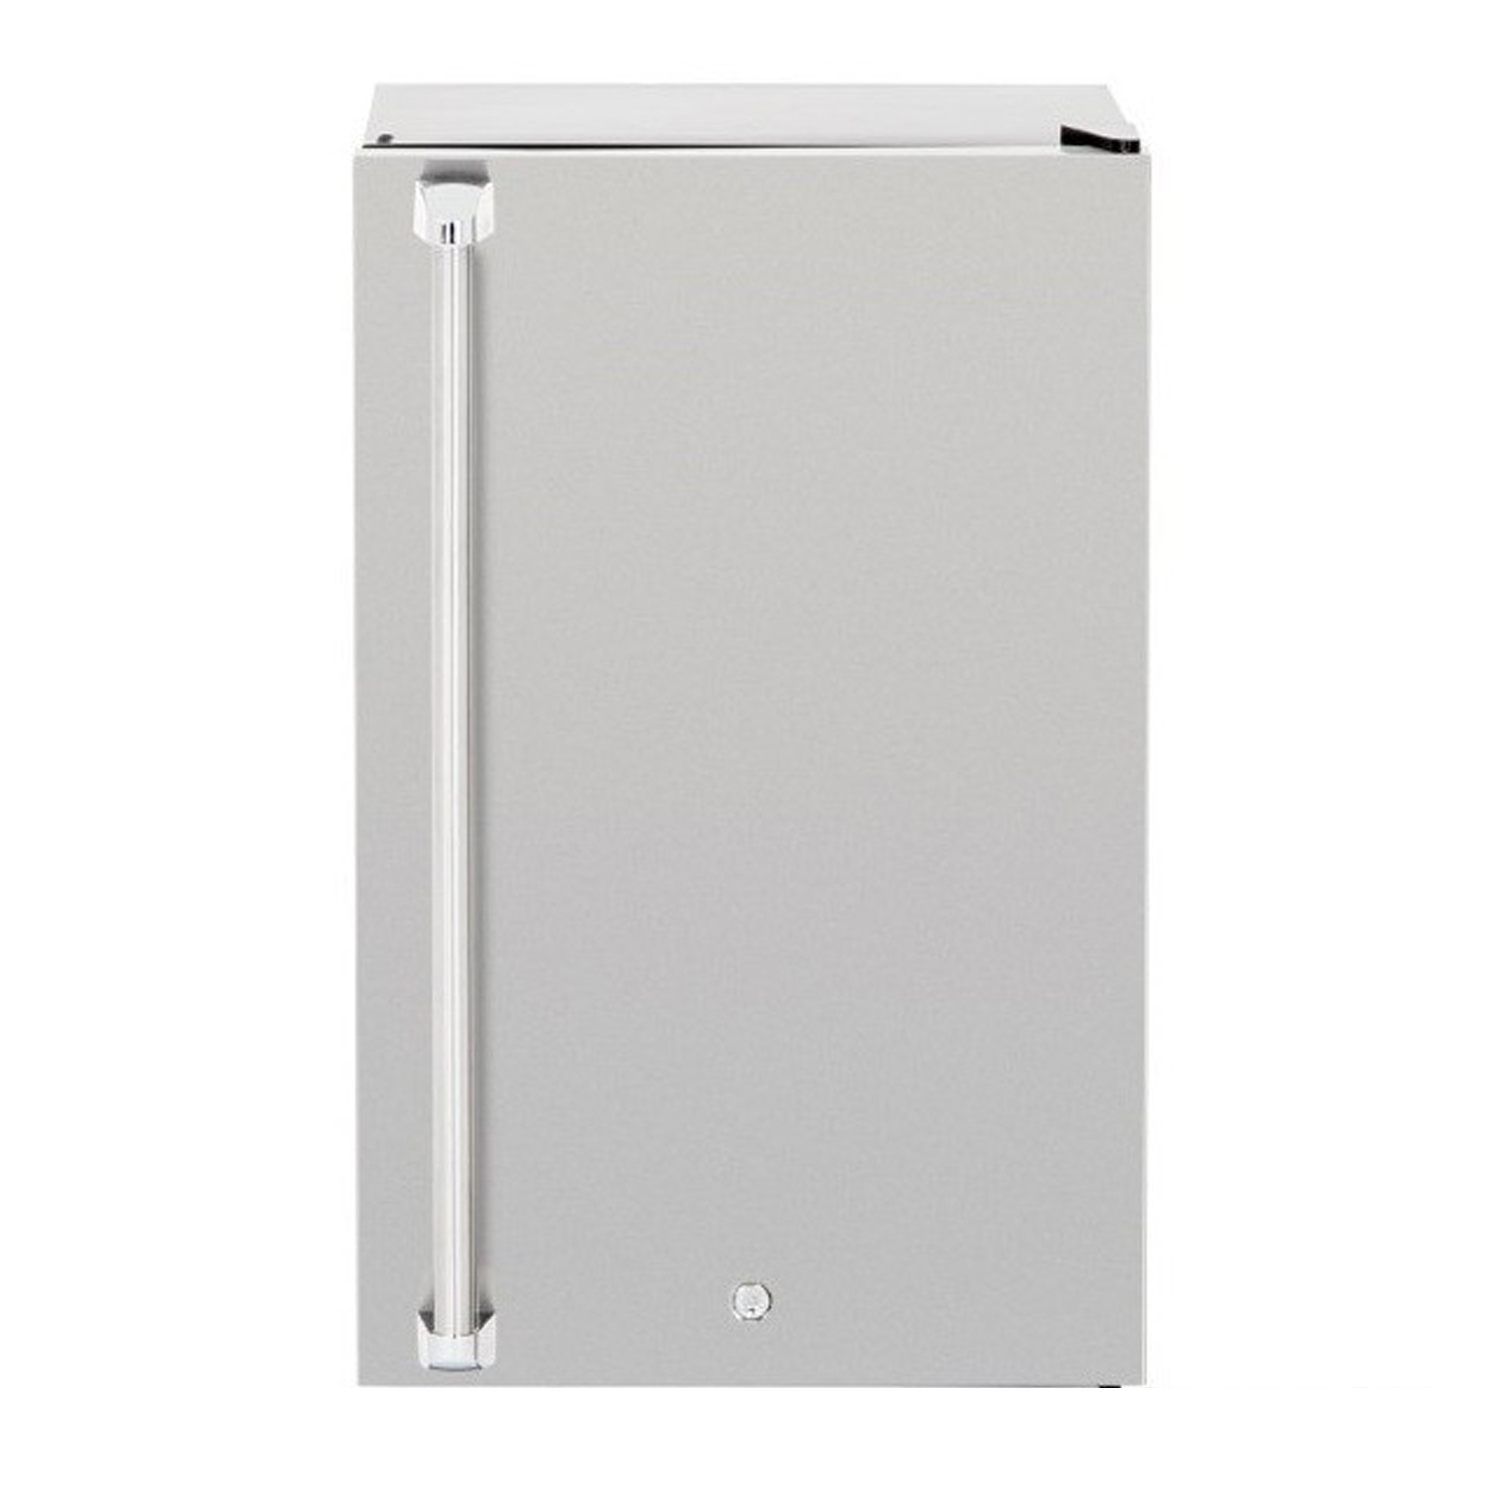 Lion Premium Grills Compact Refrigerator - 4.5 cu ft - Silver